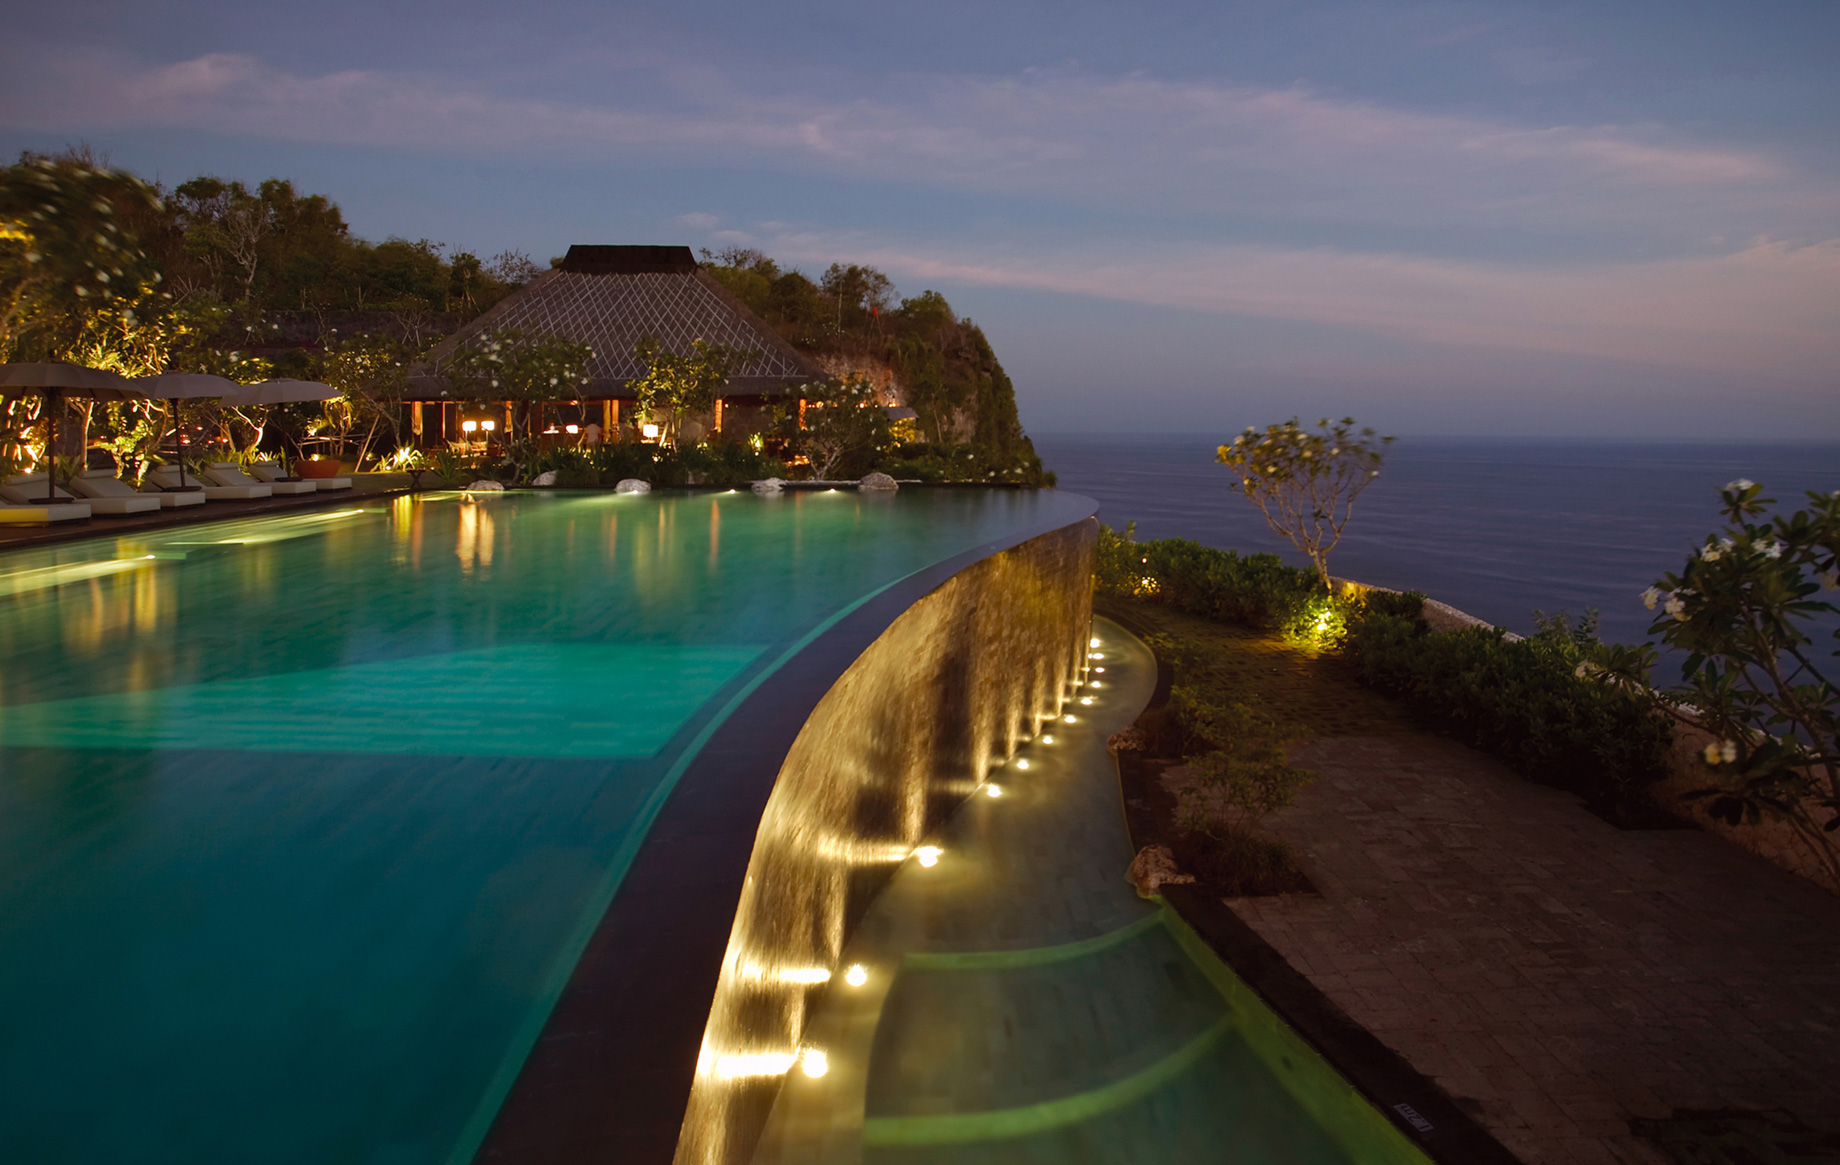 Bvlgari Resort Bali – Uluwatu, Bali, Indonesia – The Cliff Side Pool Sunset